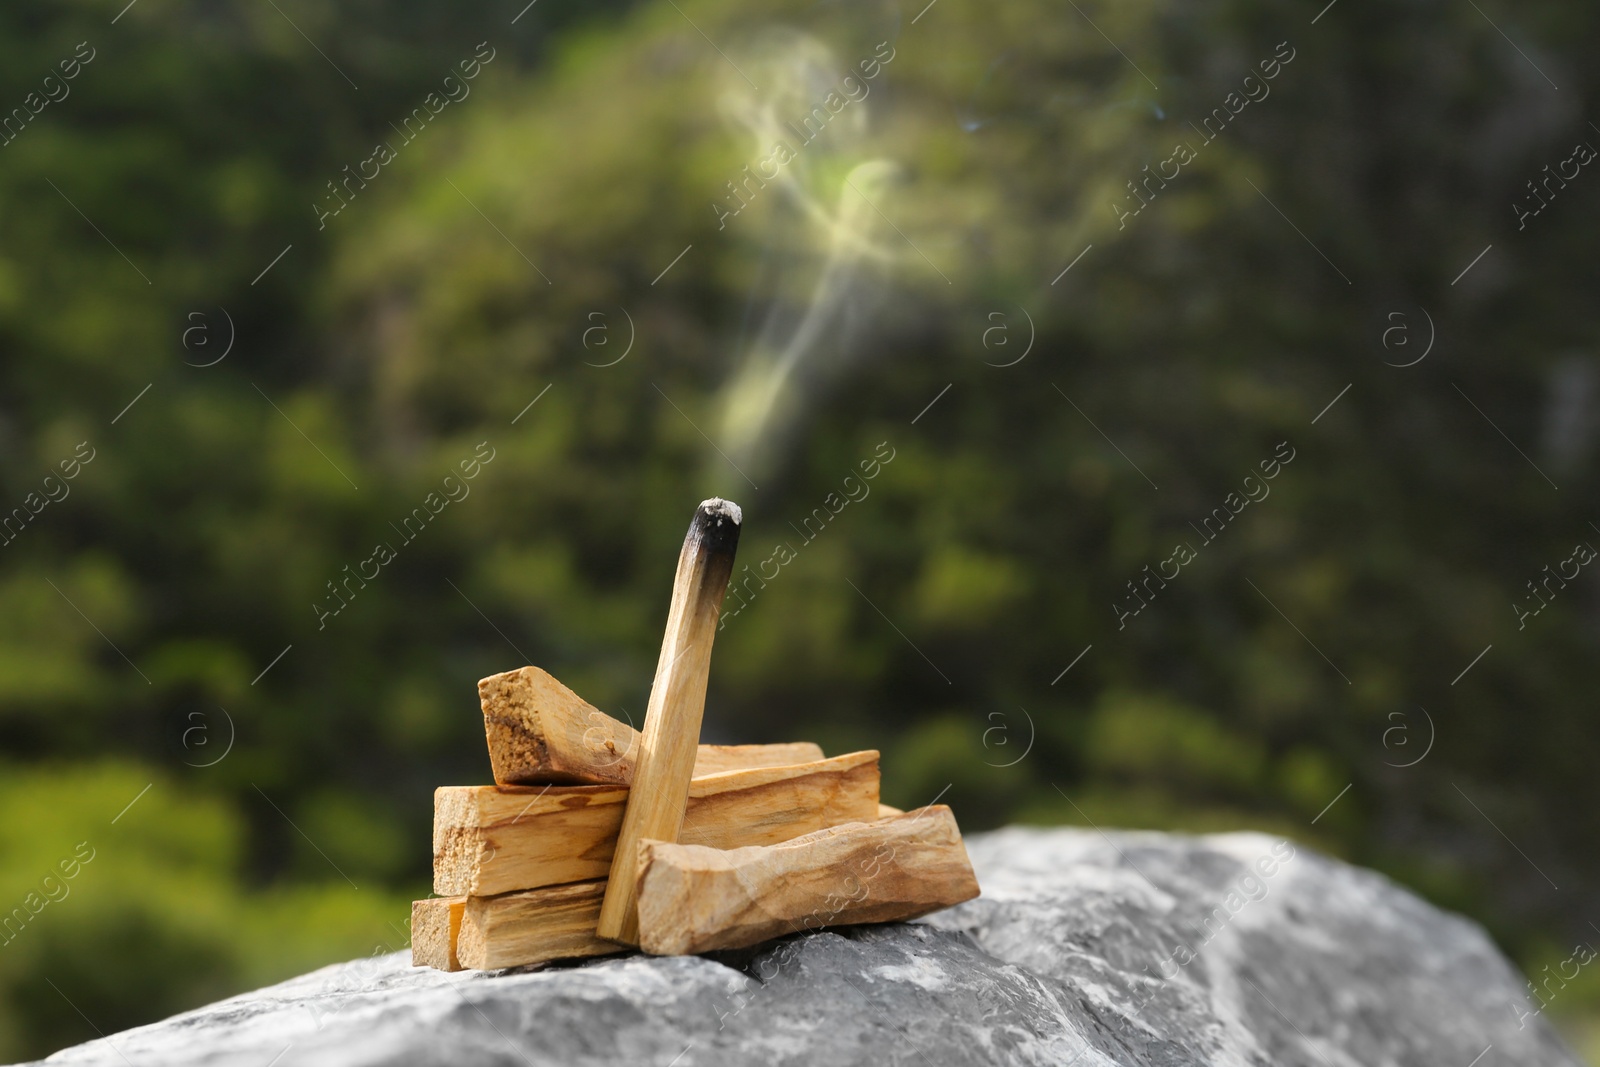 Photo of Burnt palo santo stick on stone surface outdoors